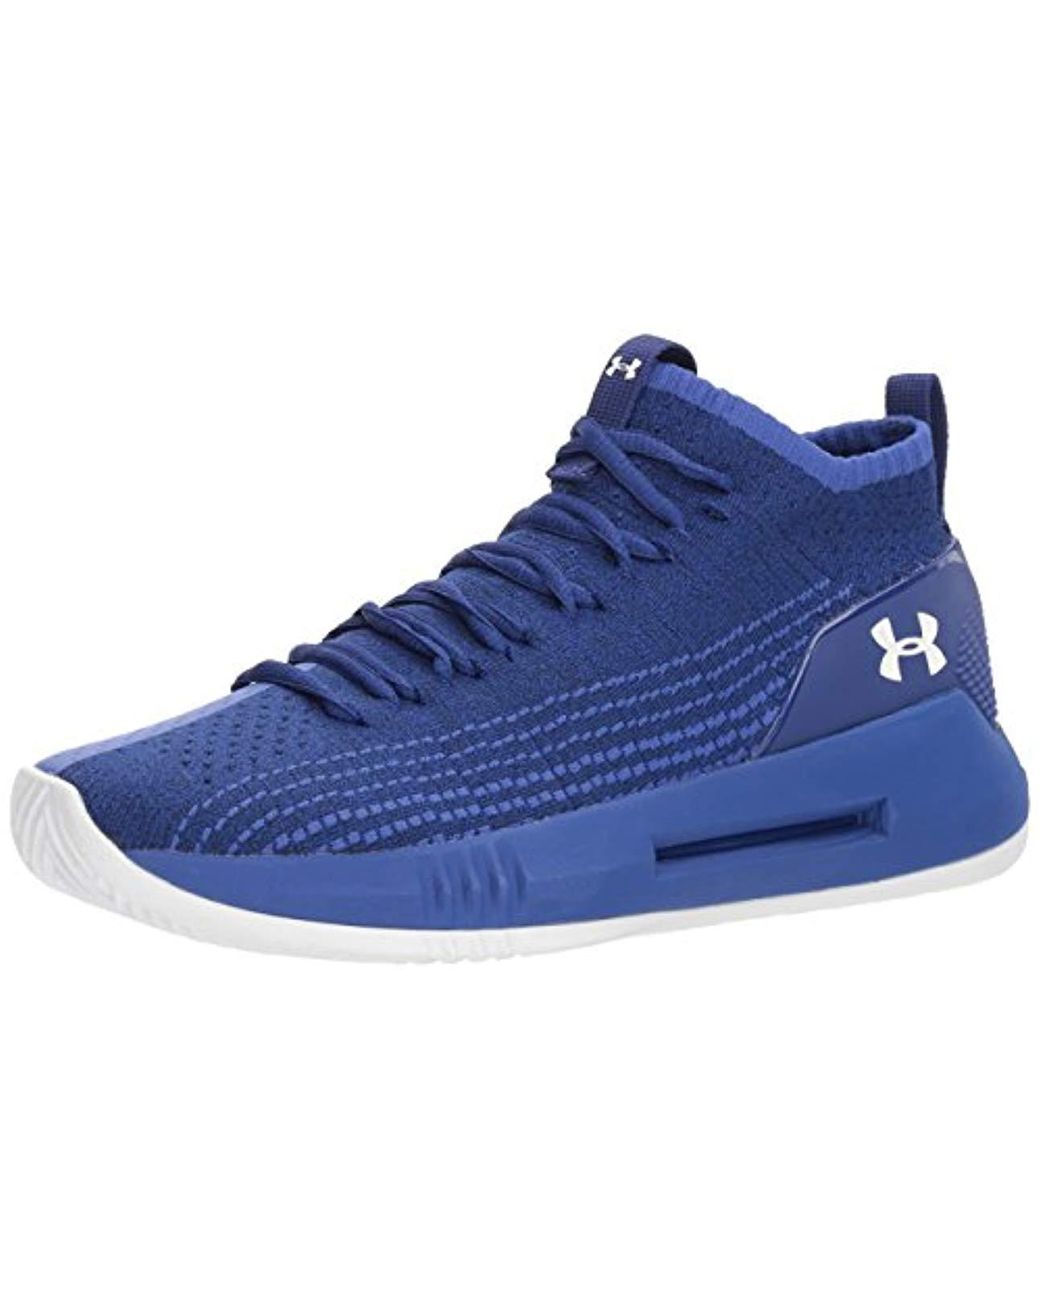 Under Armour Synthetic Heat Seeker Basketball Shoe in Blue for Men ...